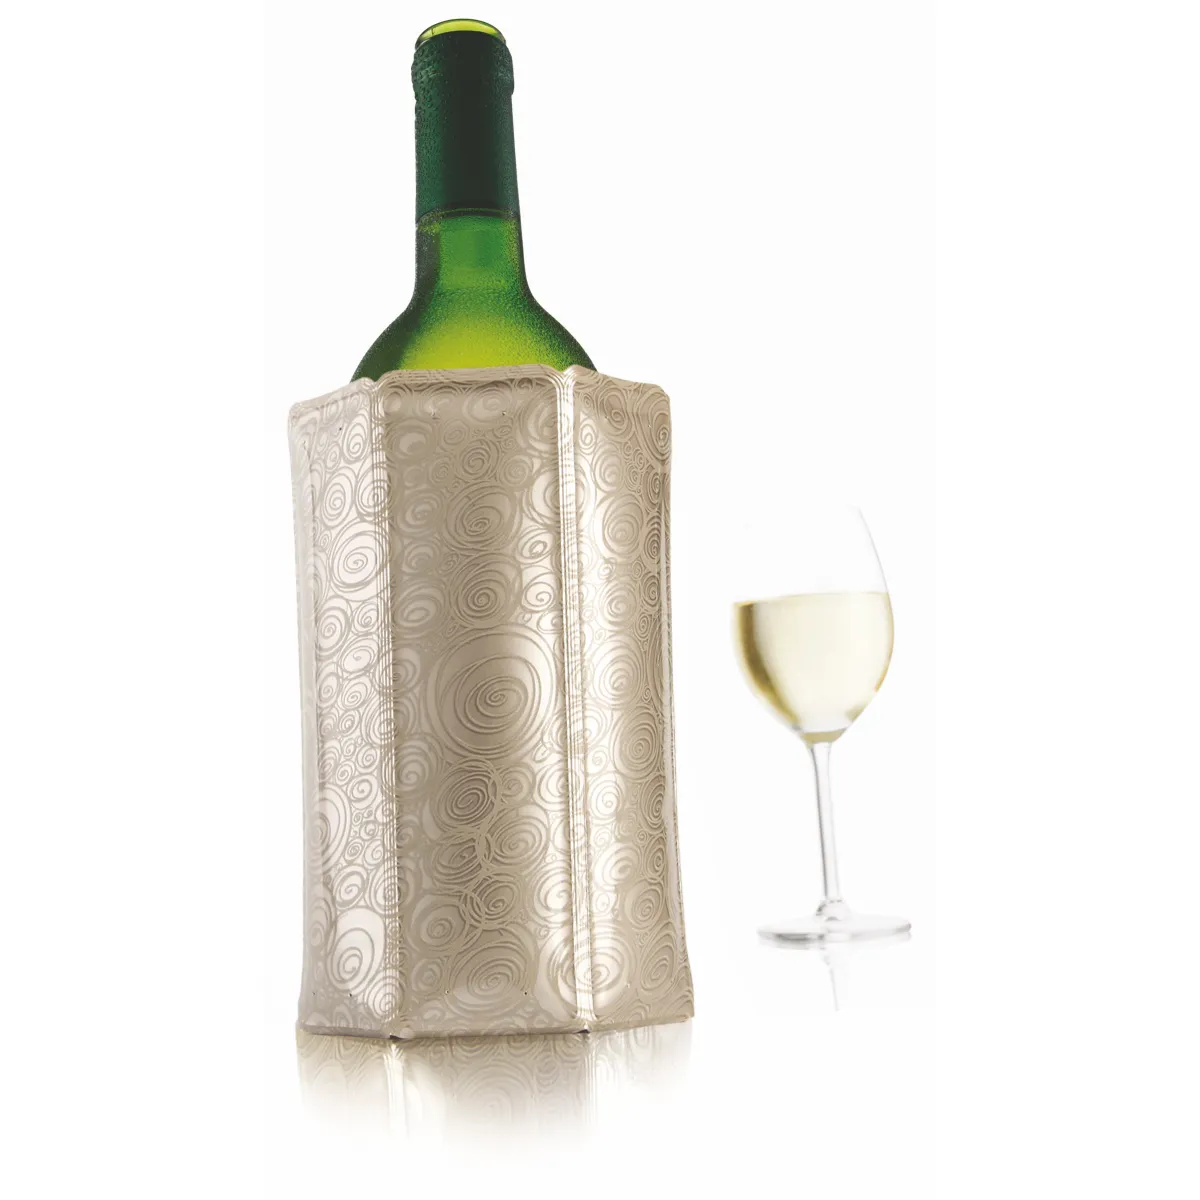 Rapid Ice Wine Vacuvin platinium pour bout 0.7 - 1 litre  146 x 201 x 30 mm